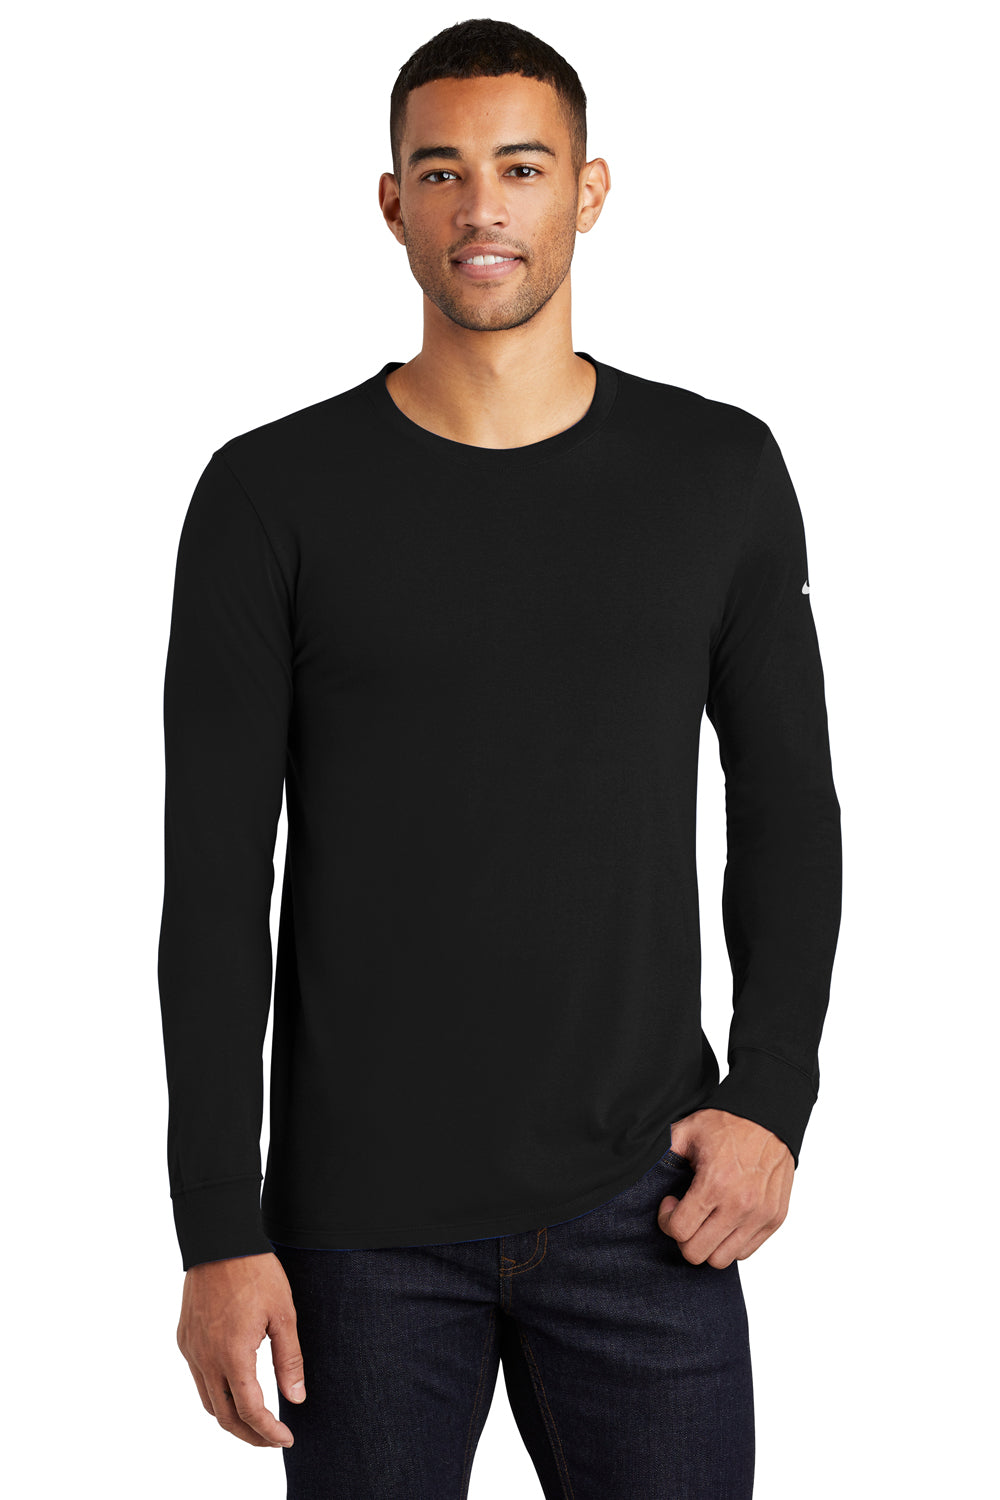 Nike NKBQ5232 Mens Core Long Sleeve Crewneck T-Shirt Black Front